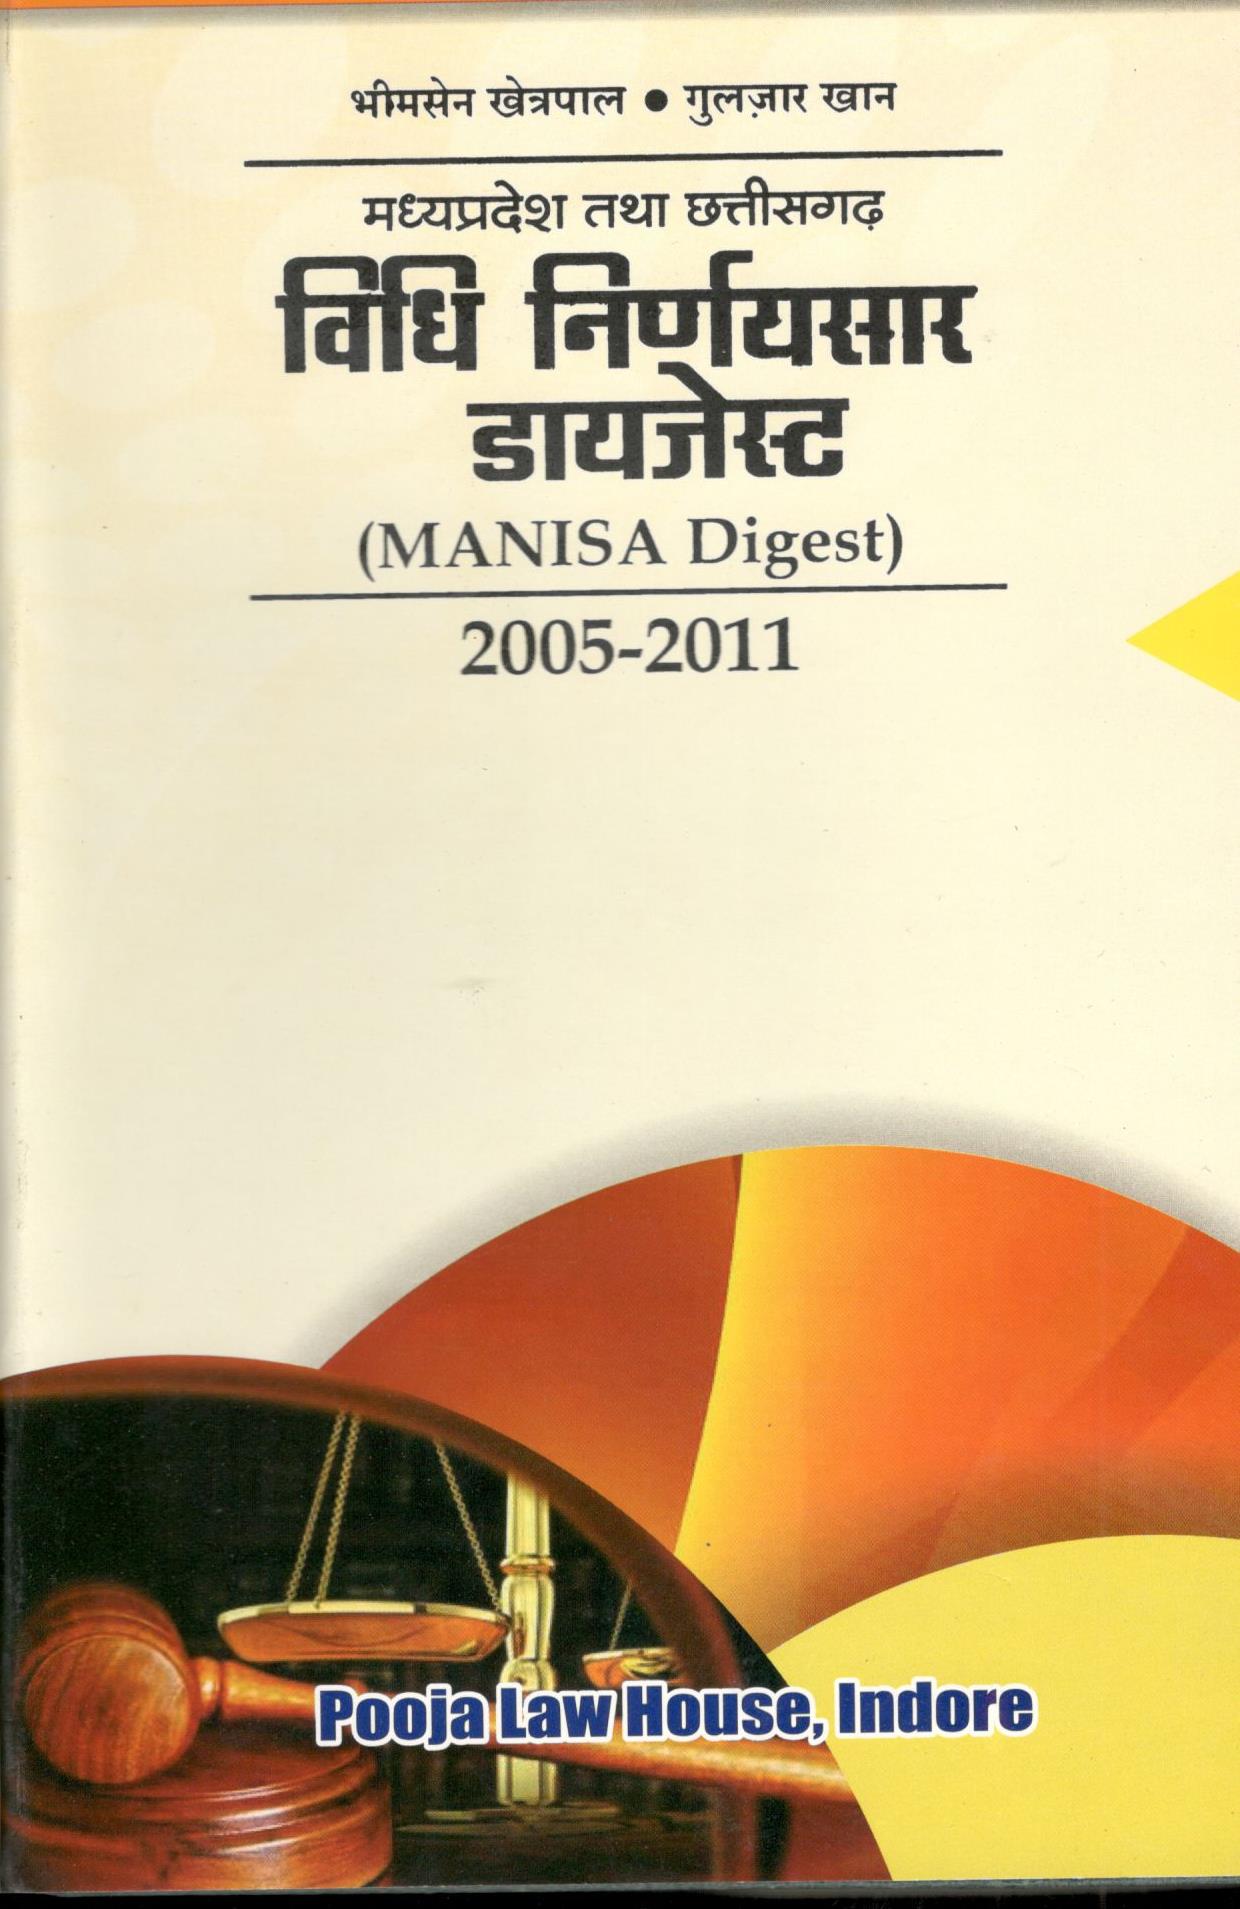 गुलज़ार खान – मध्य प्रदेश/छत्तीसगढ़ विधि निर्णयसार डायजेस्ट (मनीसा डाइजेस्ट) (2005-2011) / Madhya Pradesh/Chhattisgarh VNS Digest (2005-2011)